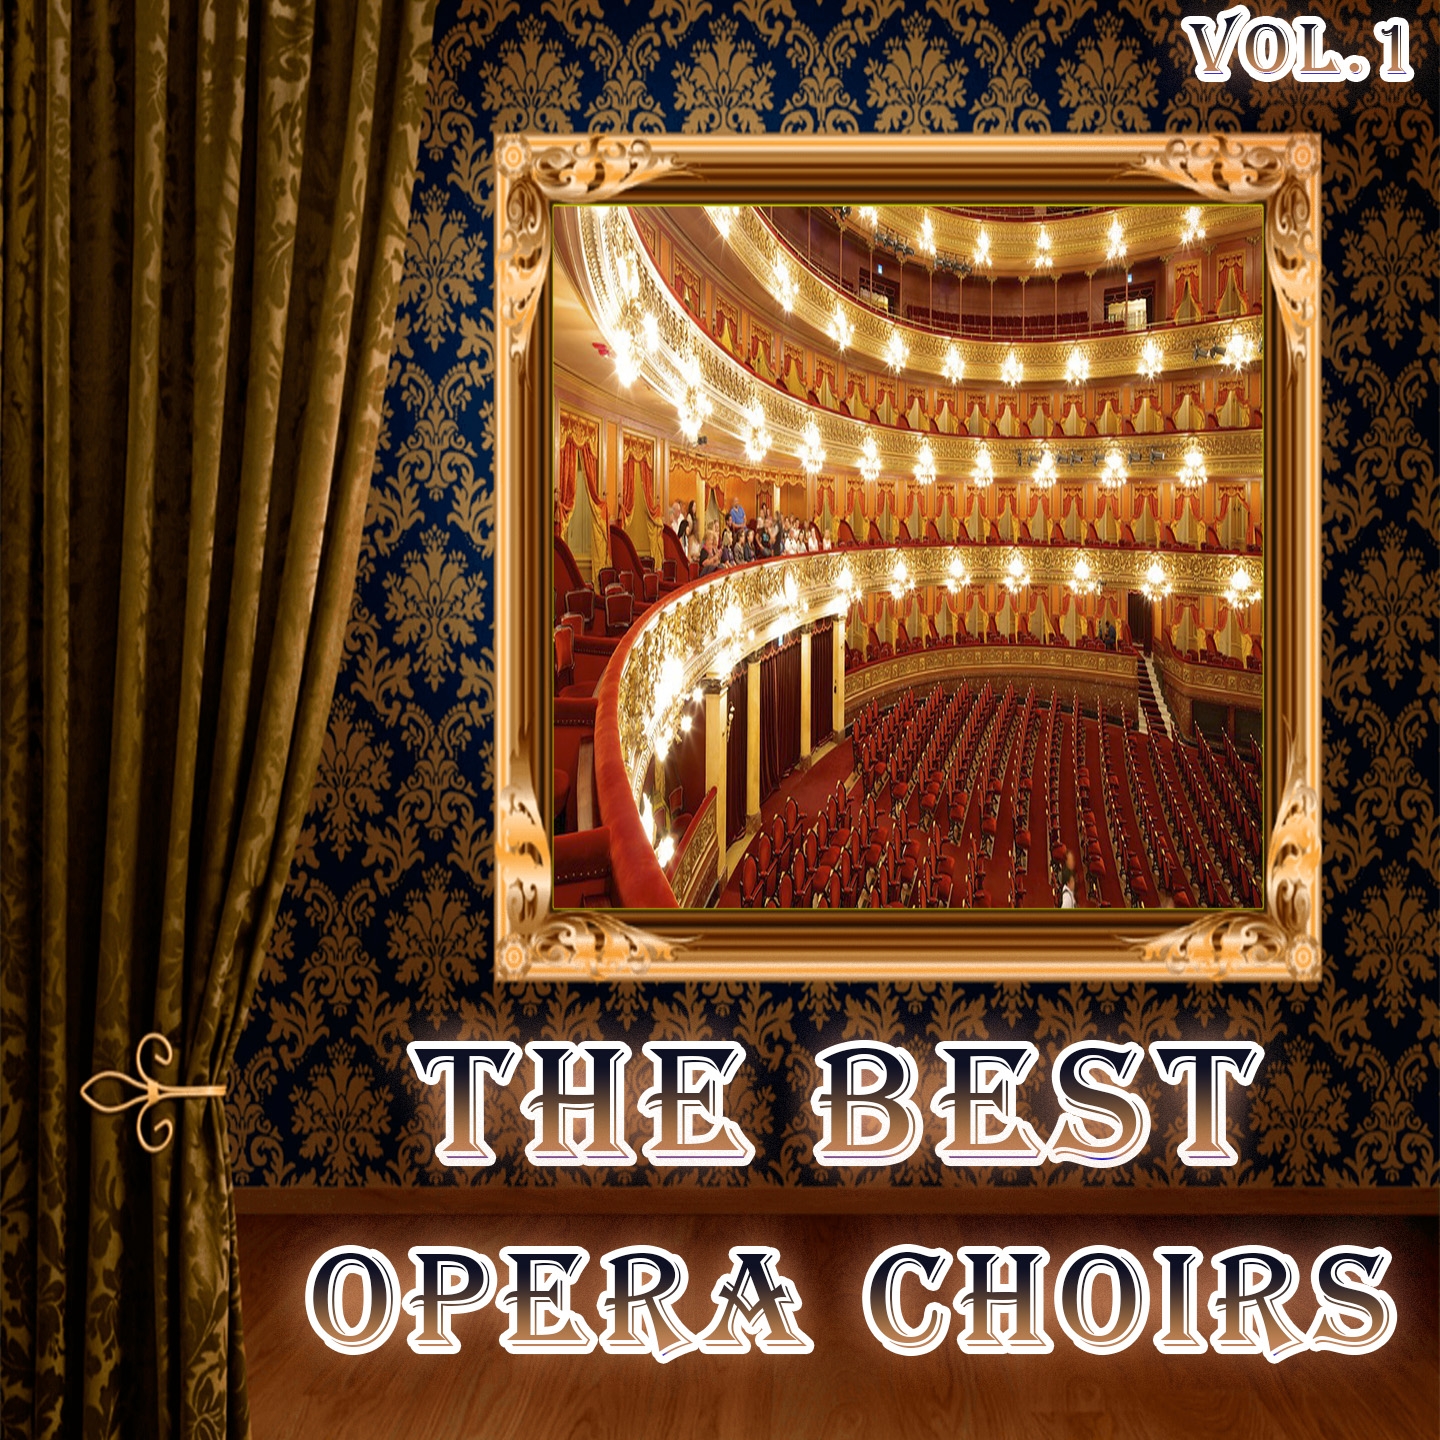 The Best Opera Choirs, Vol. 1